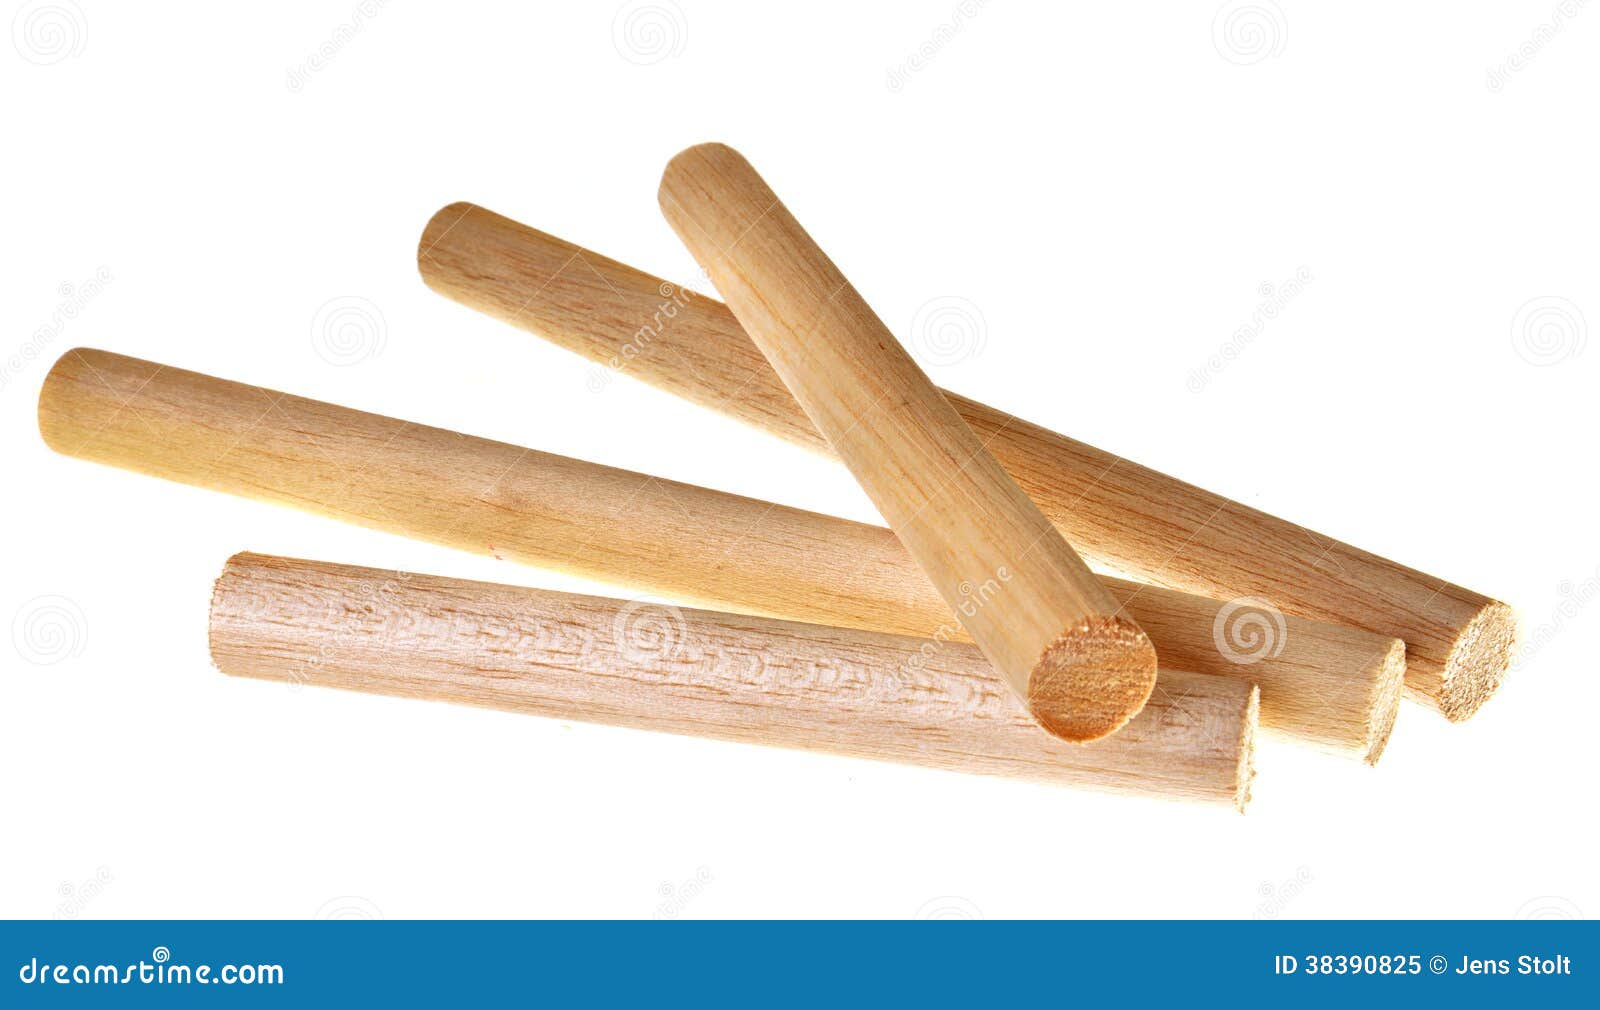 Sticks of balsa wood stock image. Image of balsa, education - 38390825